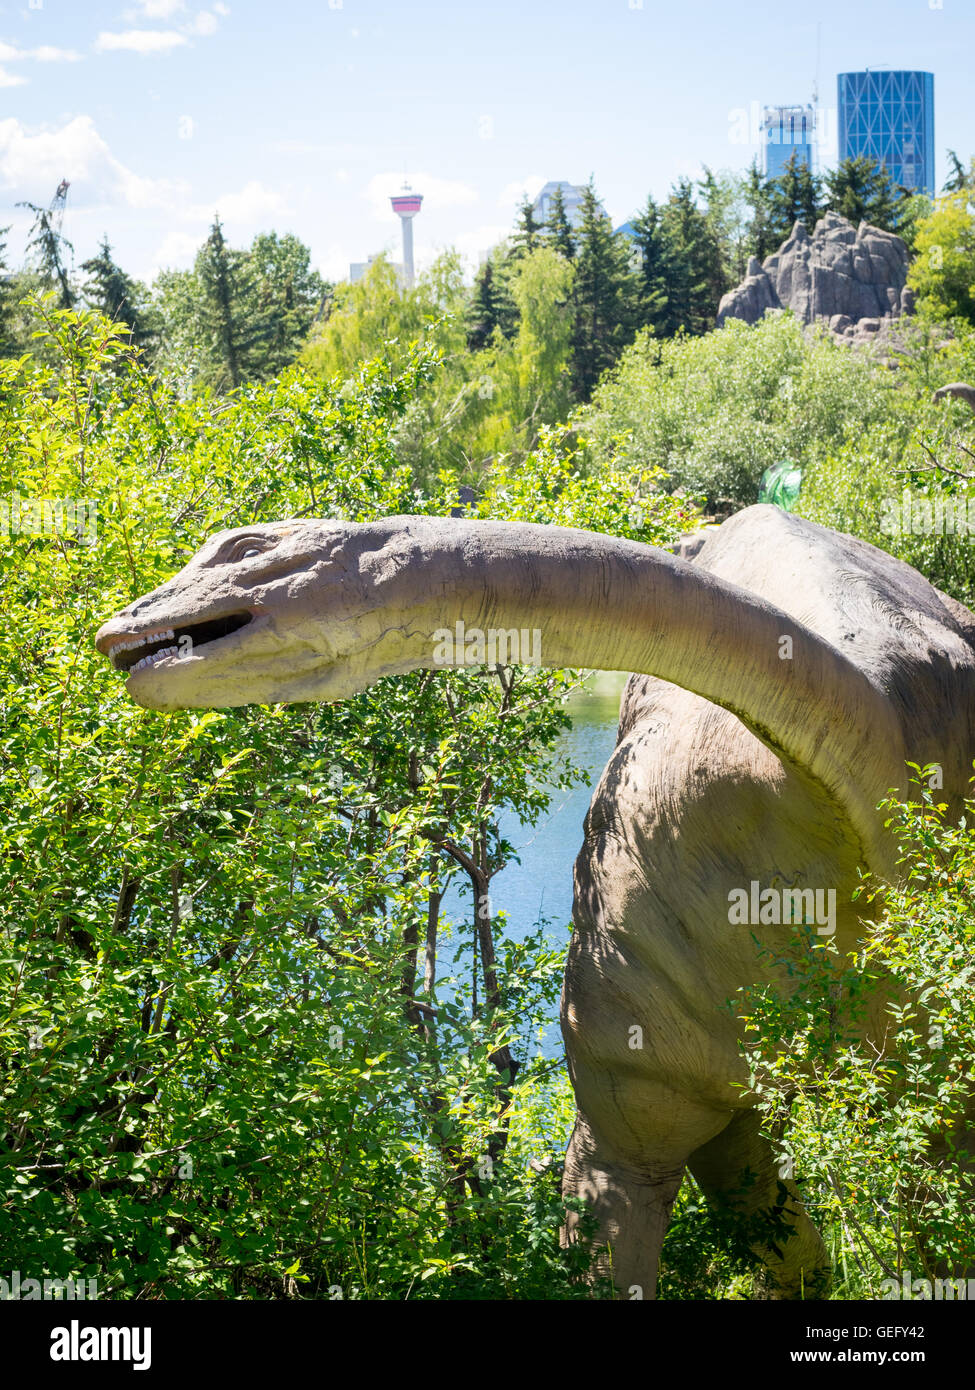 A model replica of an Apatosaurus, a genus of sauropod dinosaur. Calgary Zoo, Calgary, Alberta, Canada. Stock Photo